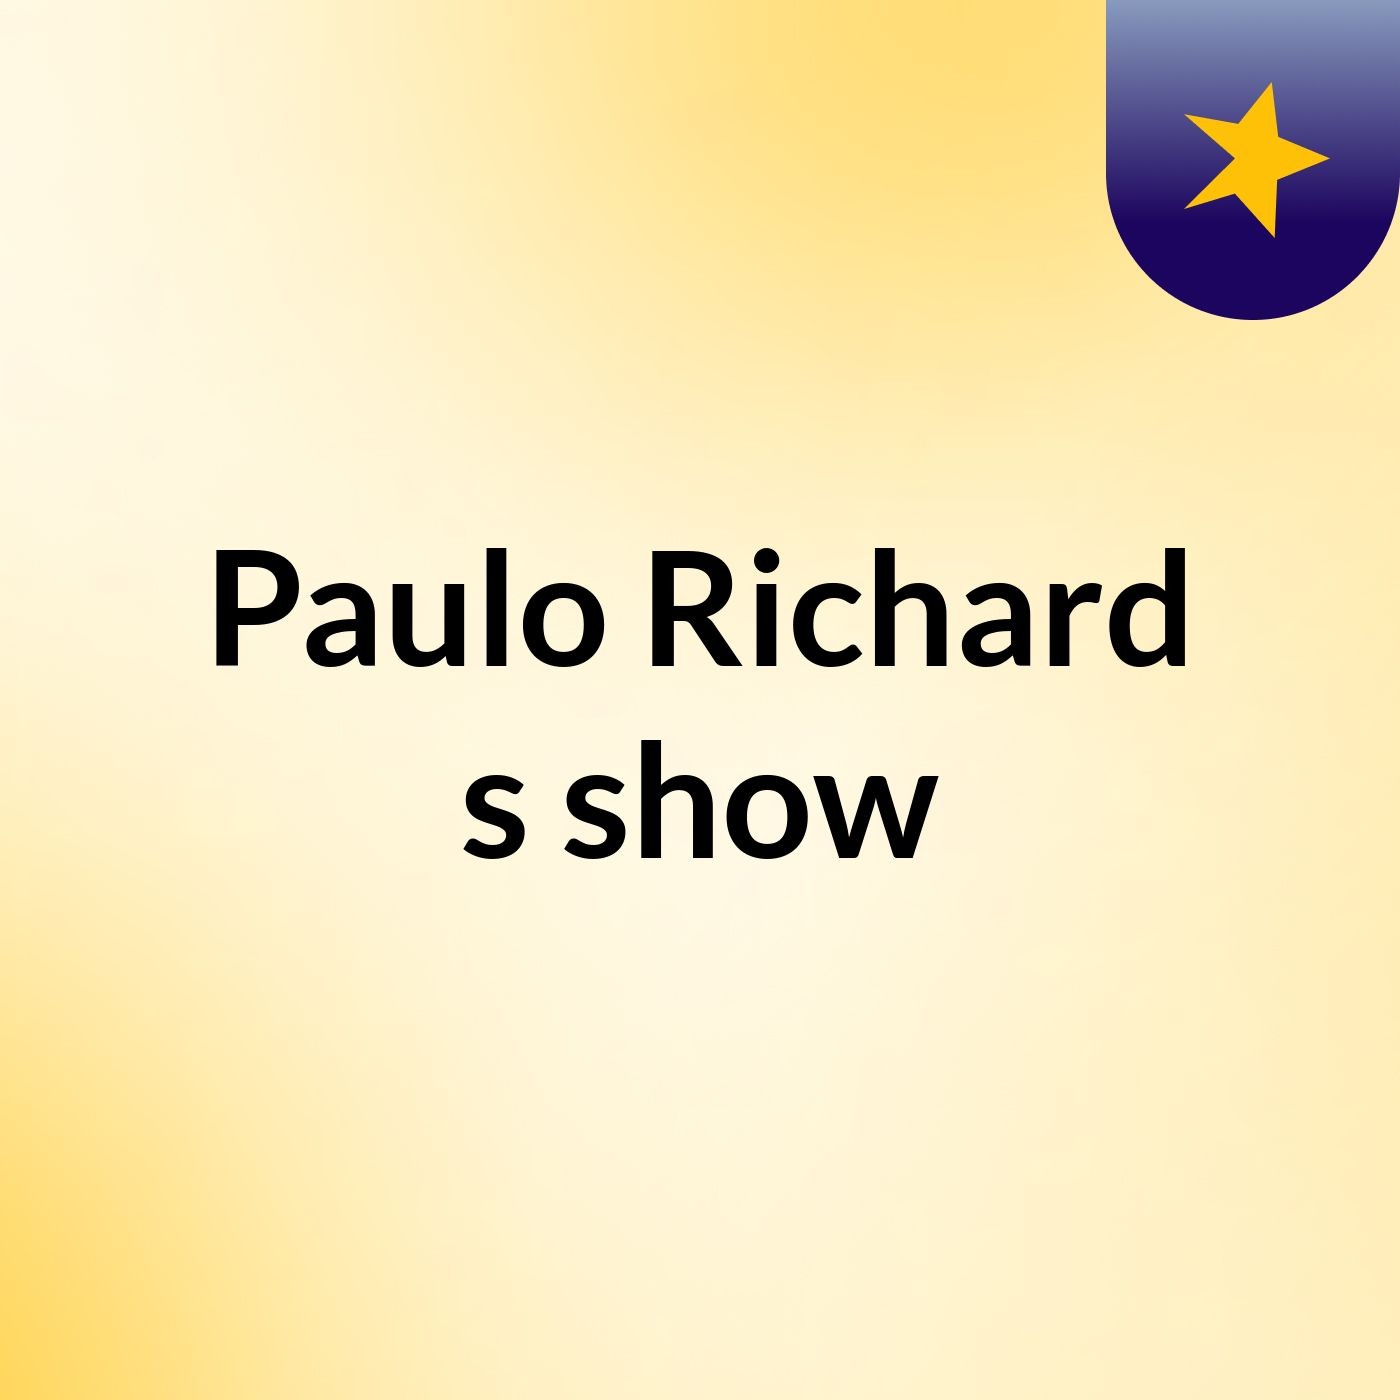 Paulo Richard's show